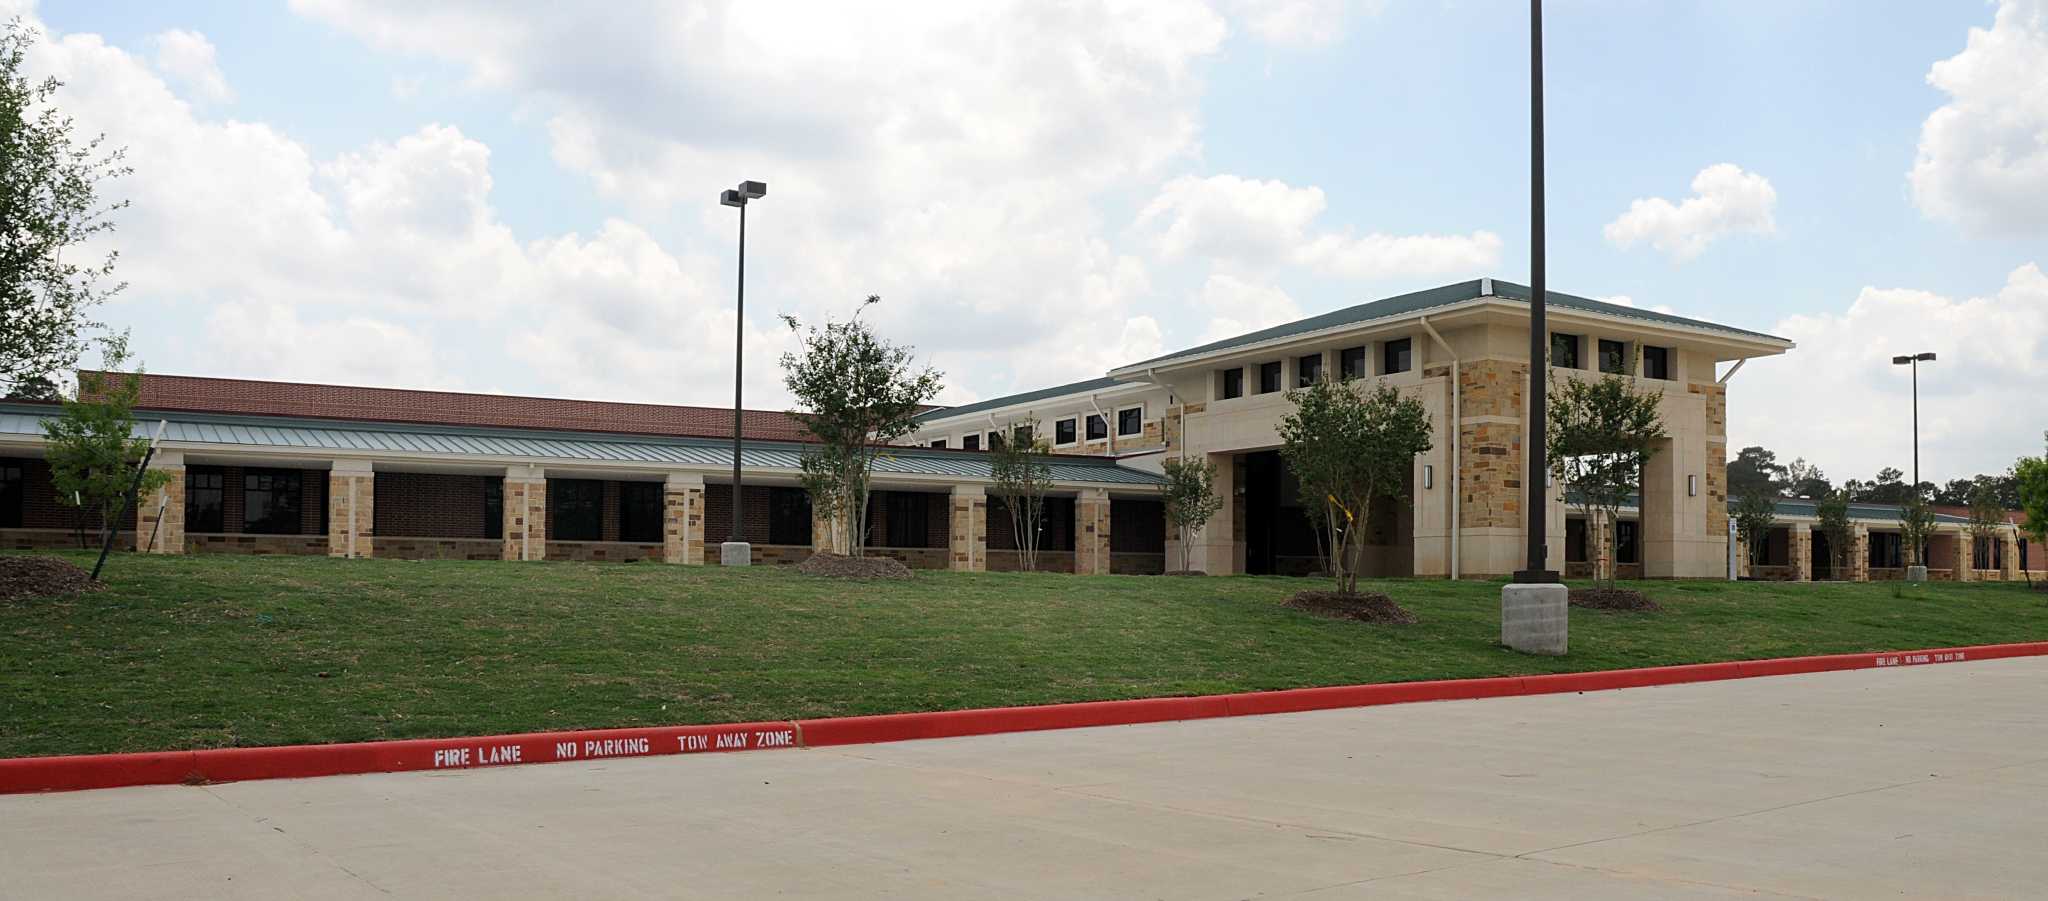 Katy ISD tops Houston area elementary school list - Houston Chronicle